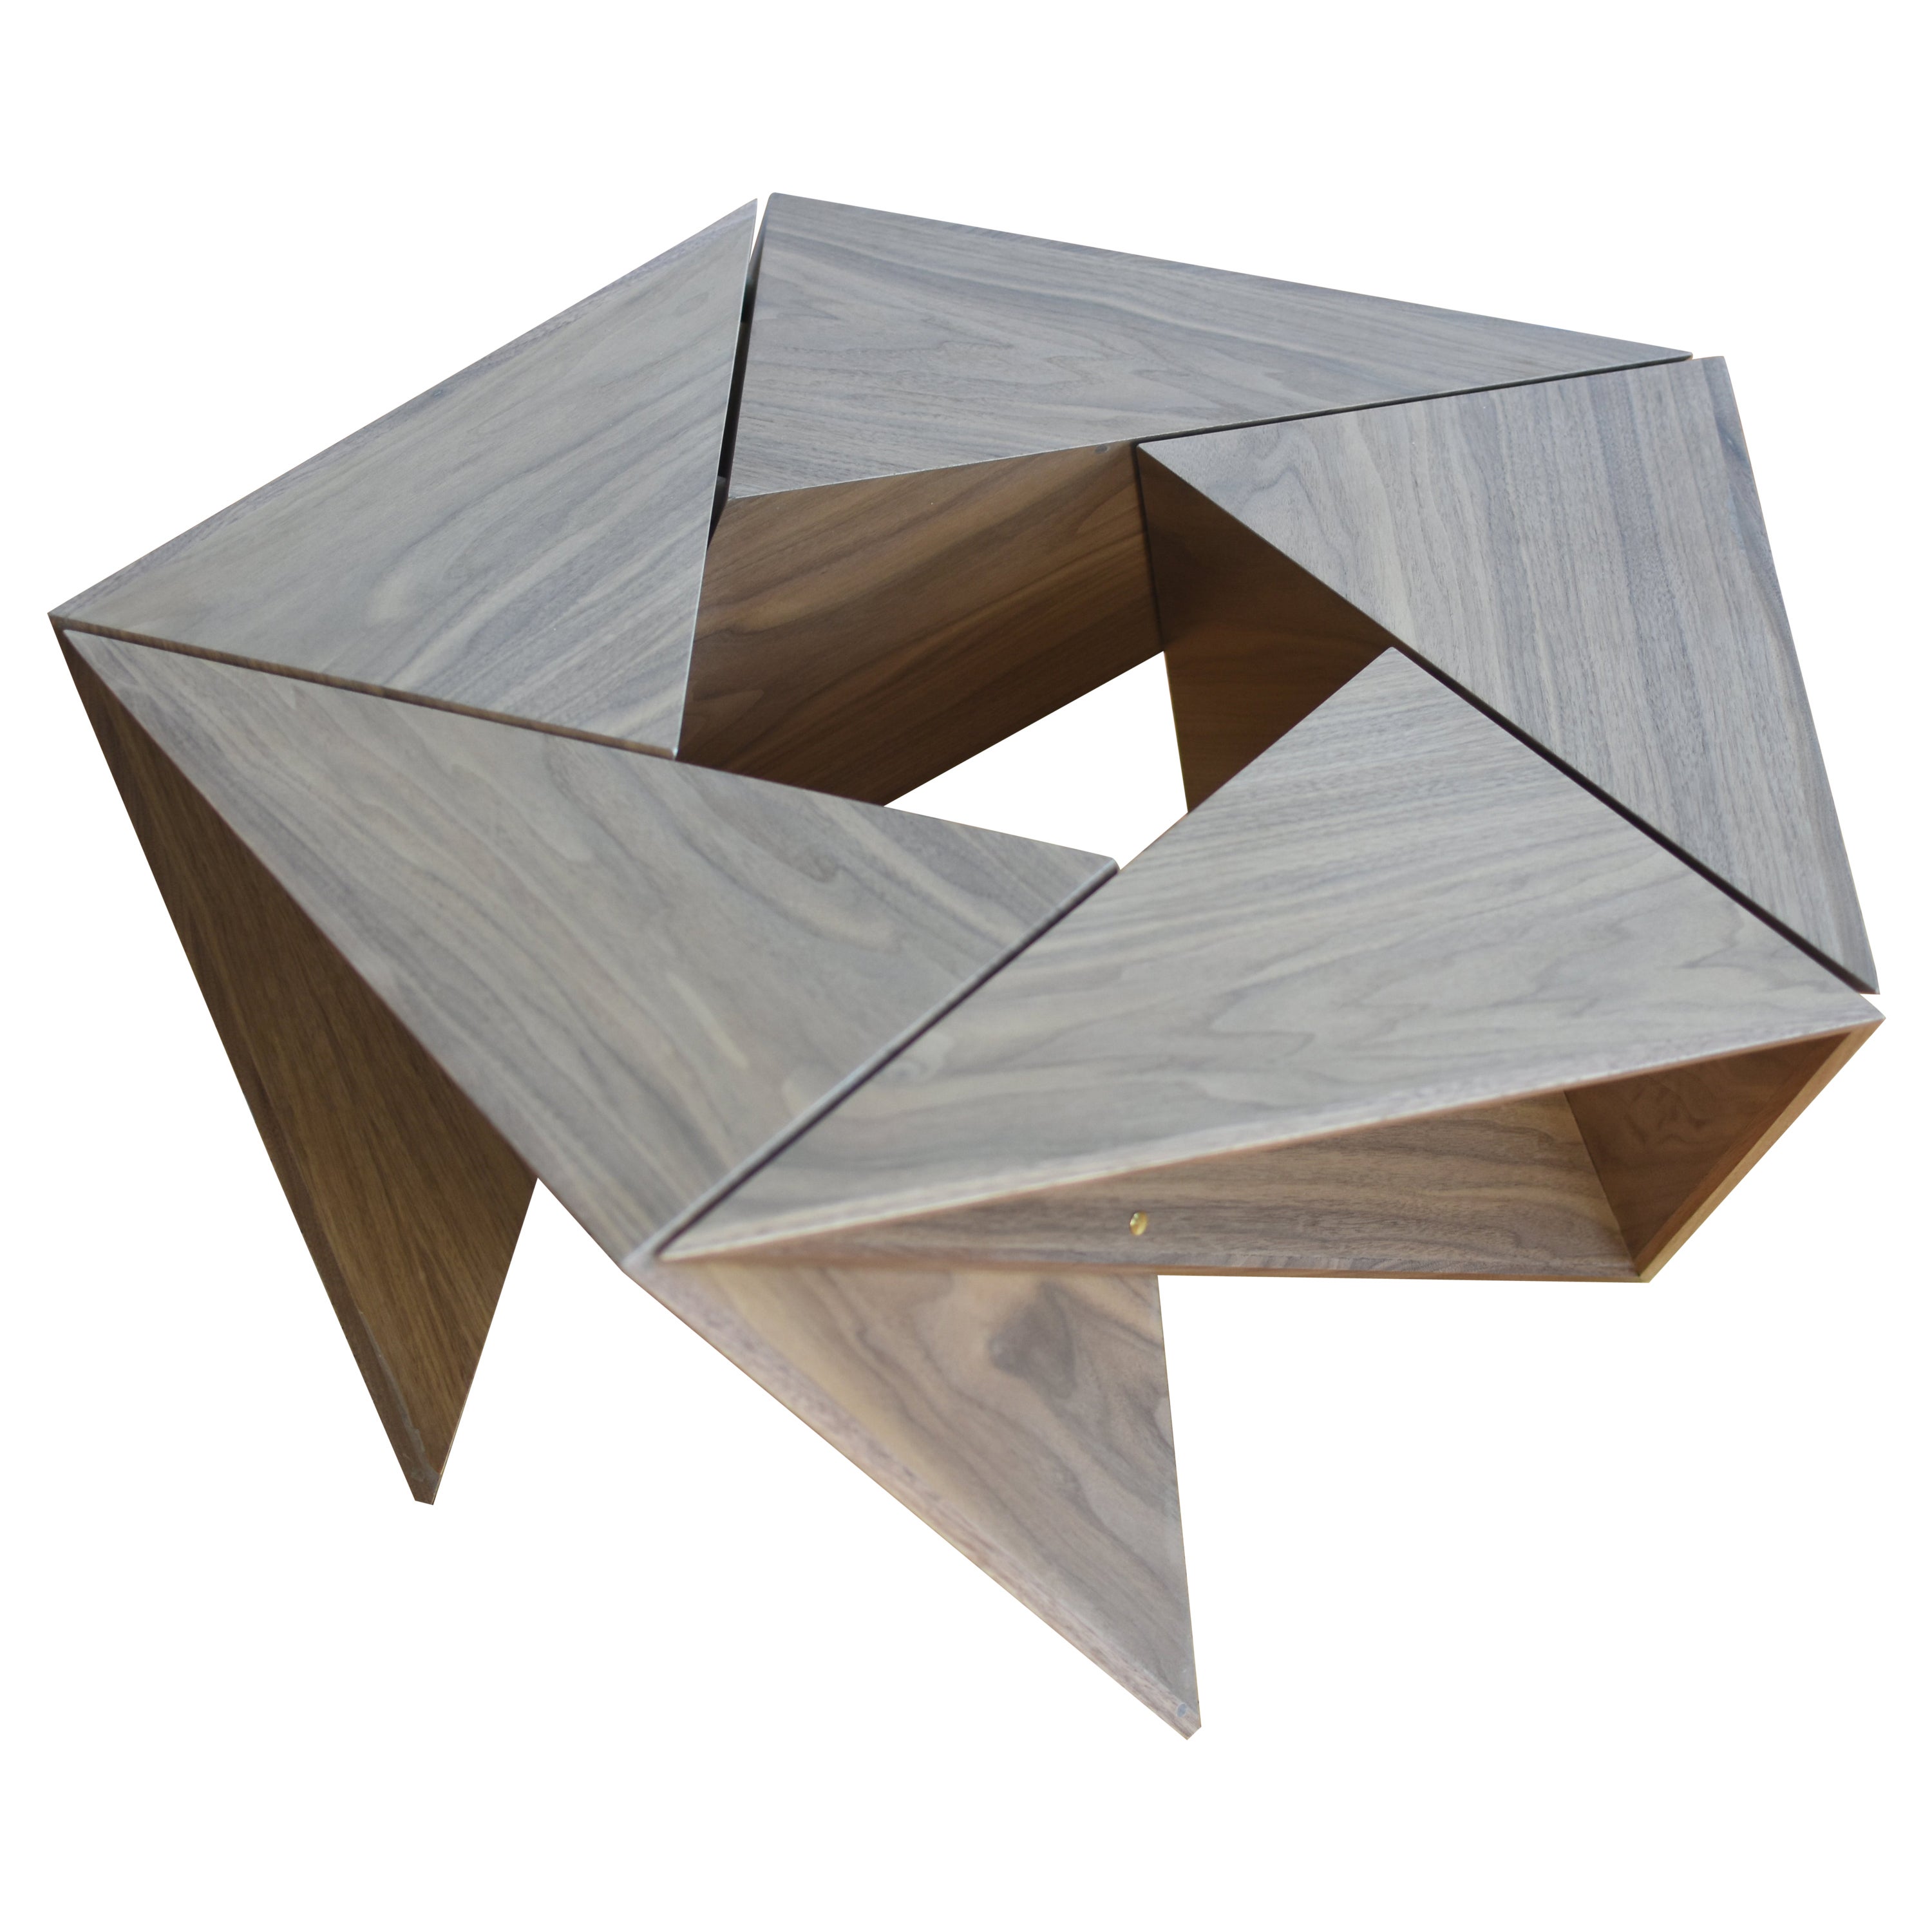 El Cangrejito, table basse modulaire pentagonal en noyer édition Louis Lim en vente